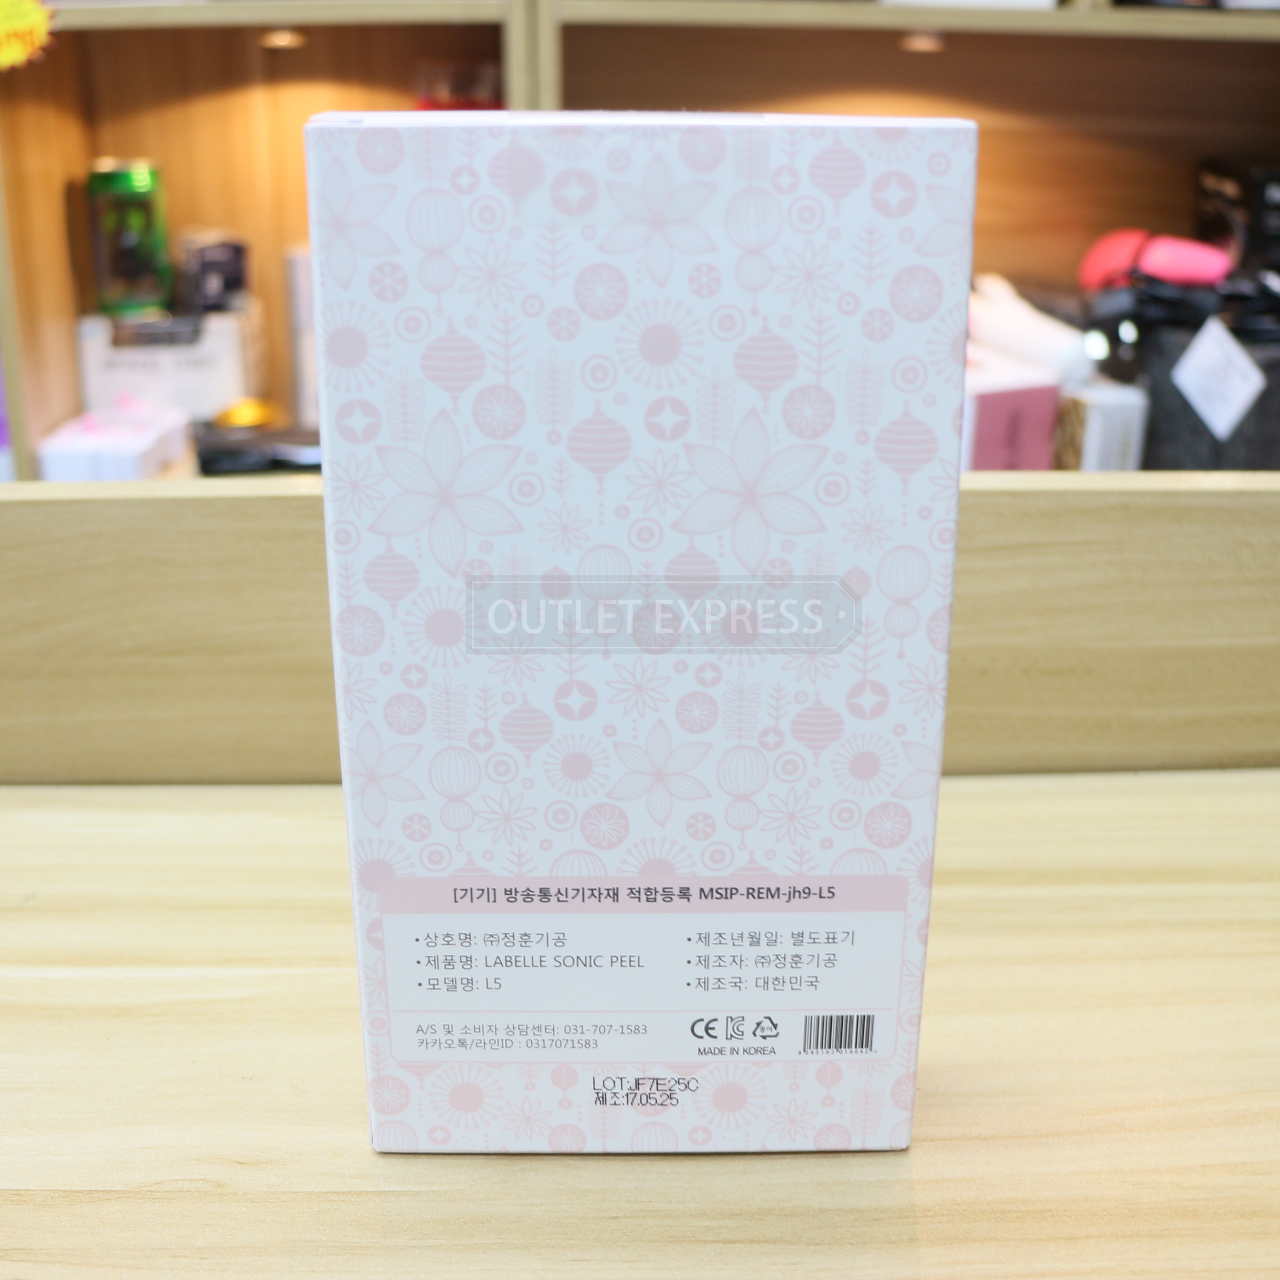 Labelle Sonic Peel L5 超聲波鏟皮機 包裝盒背面- Outlet Express HK生活百貨城實拍相片